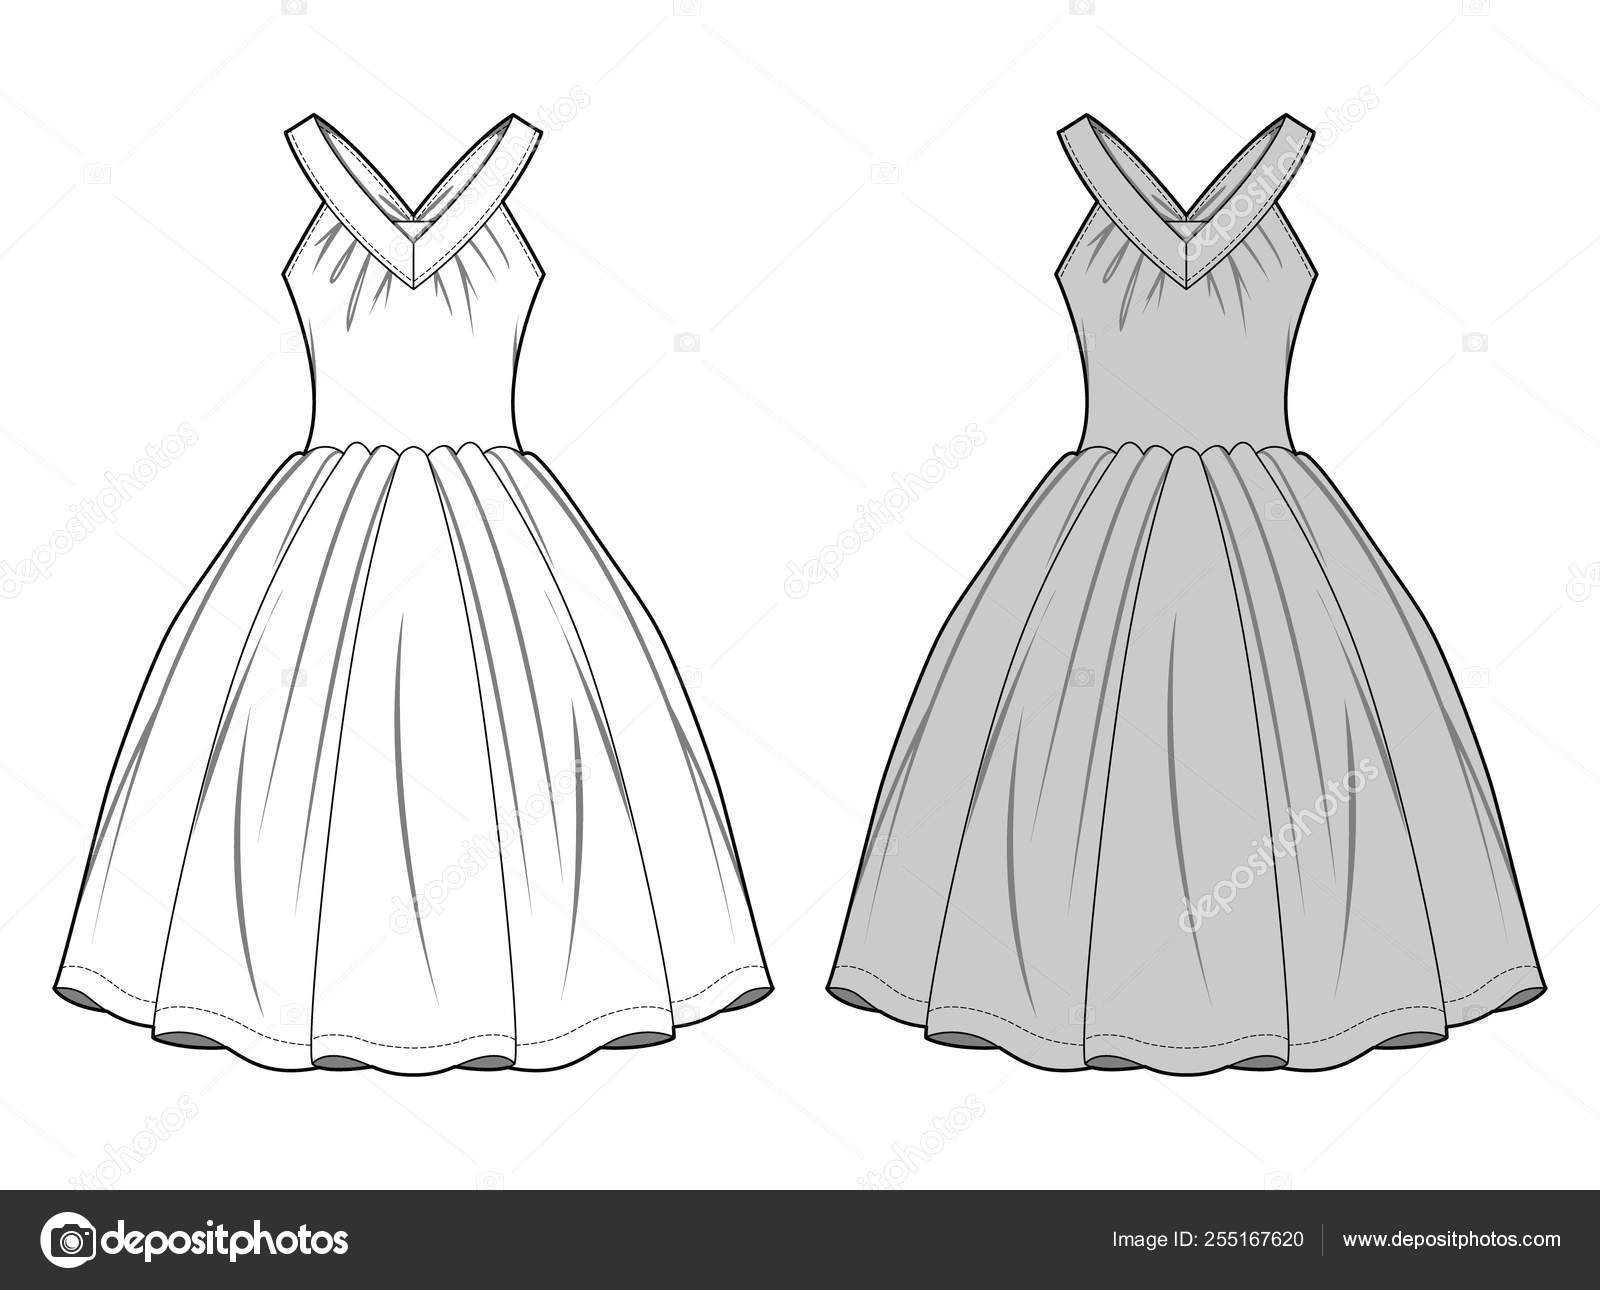 1047-dress-women-fashion-sketches – FashionDesign411